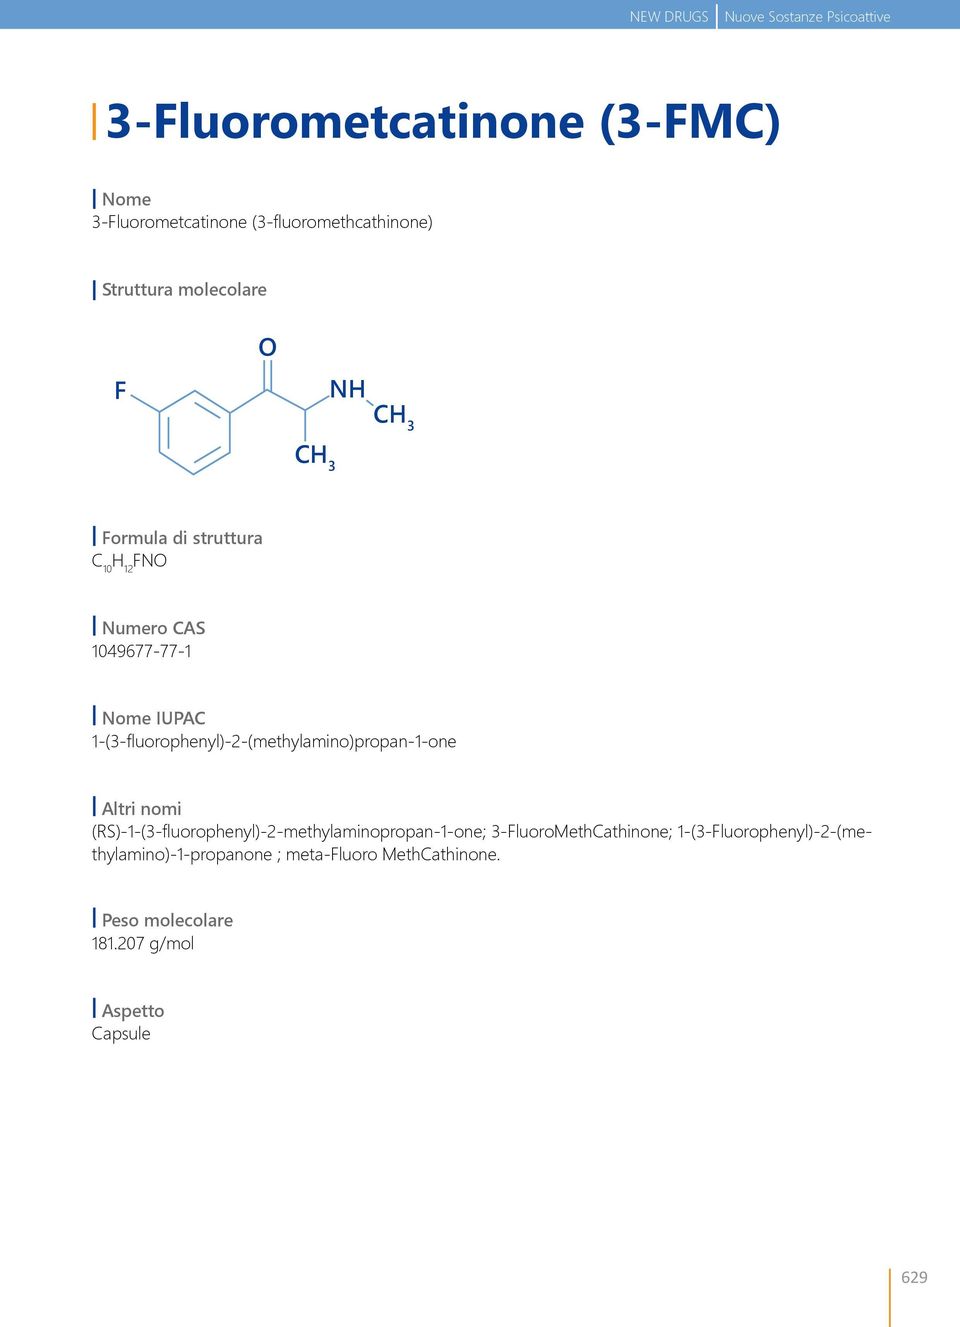 1-(3-fluorophenyl)-2-(methylamino)propan-1-one Altri nomi (RS)-1-(3-fluorophenyl)-2-methylaminopropan-1-one;